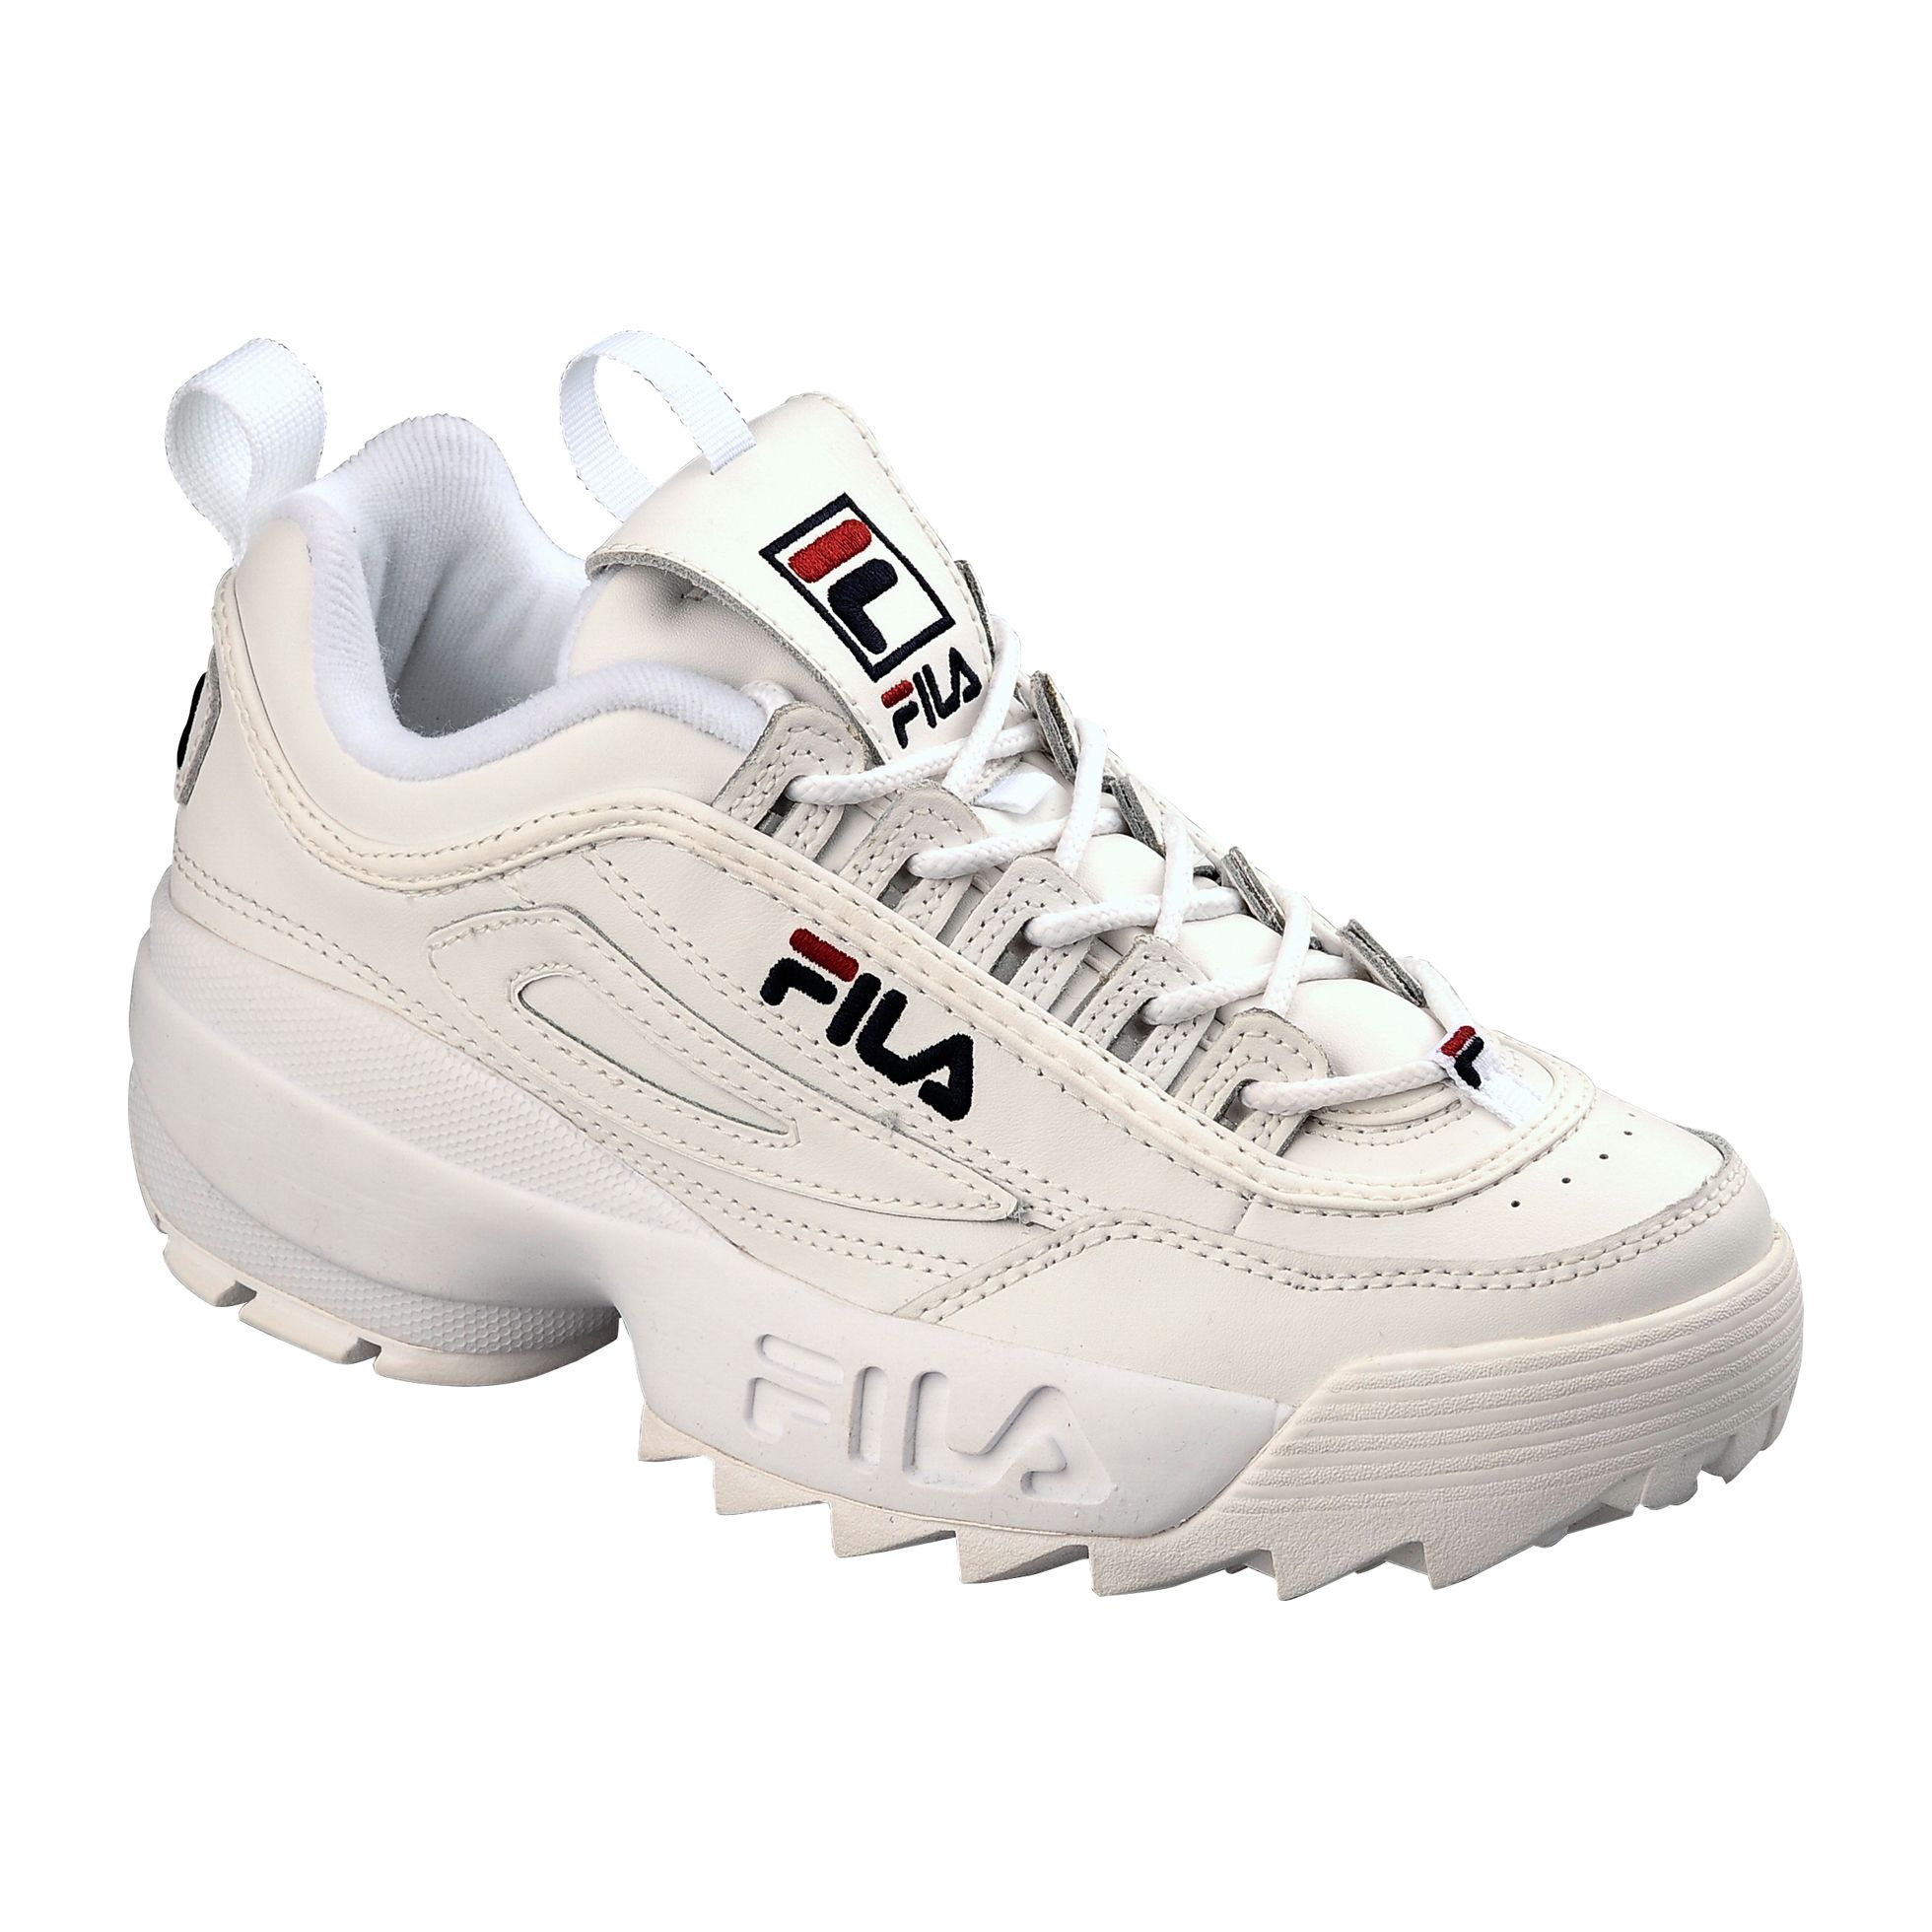 Fila Men's Disruptor Casual Athletic Shoe - White | Shop Your Way ...